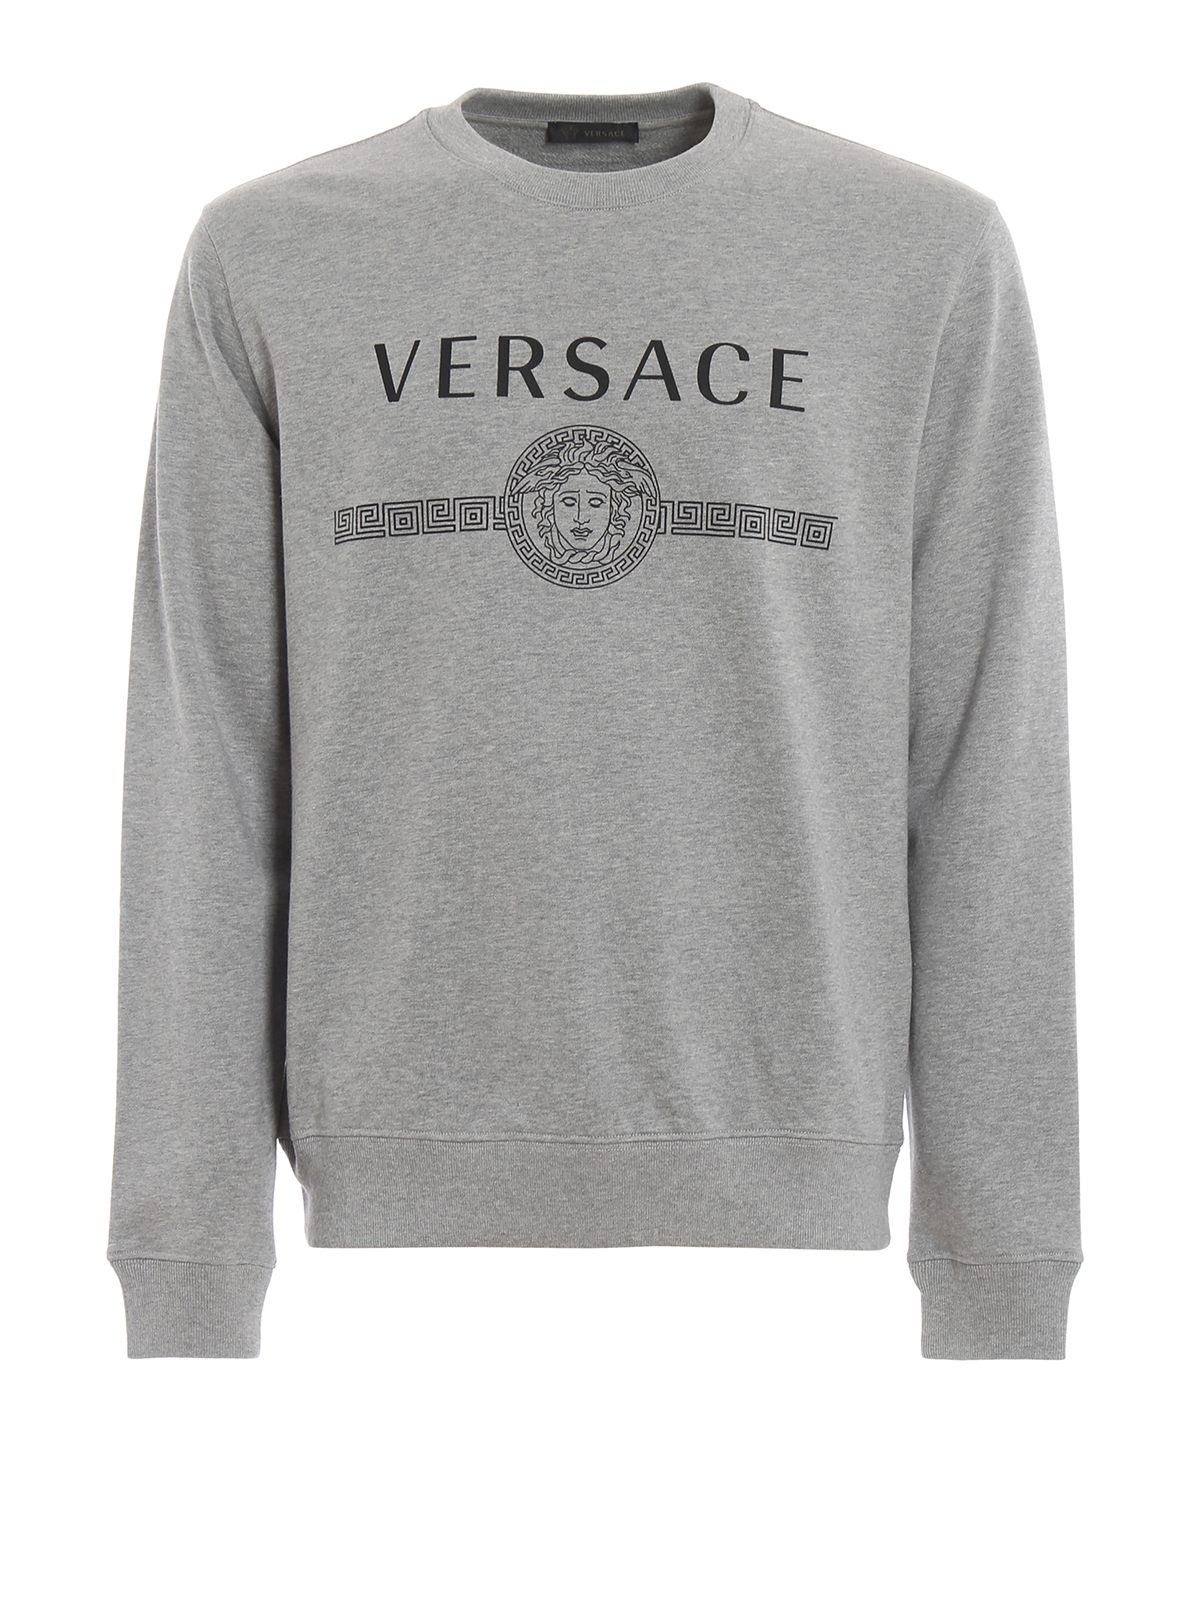 versace grey sweater